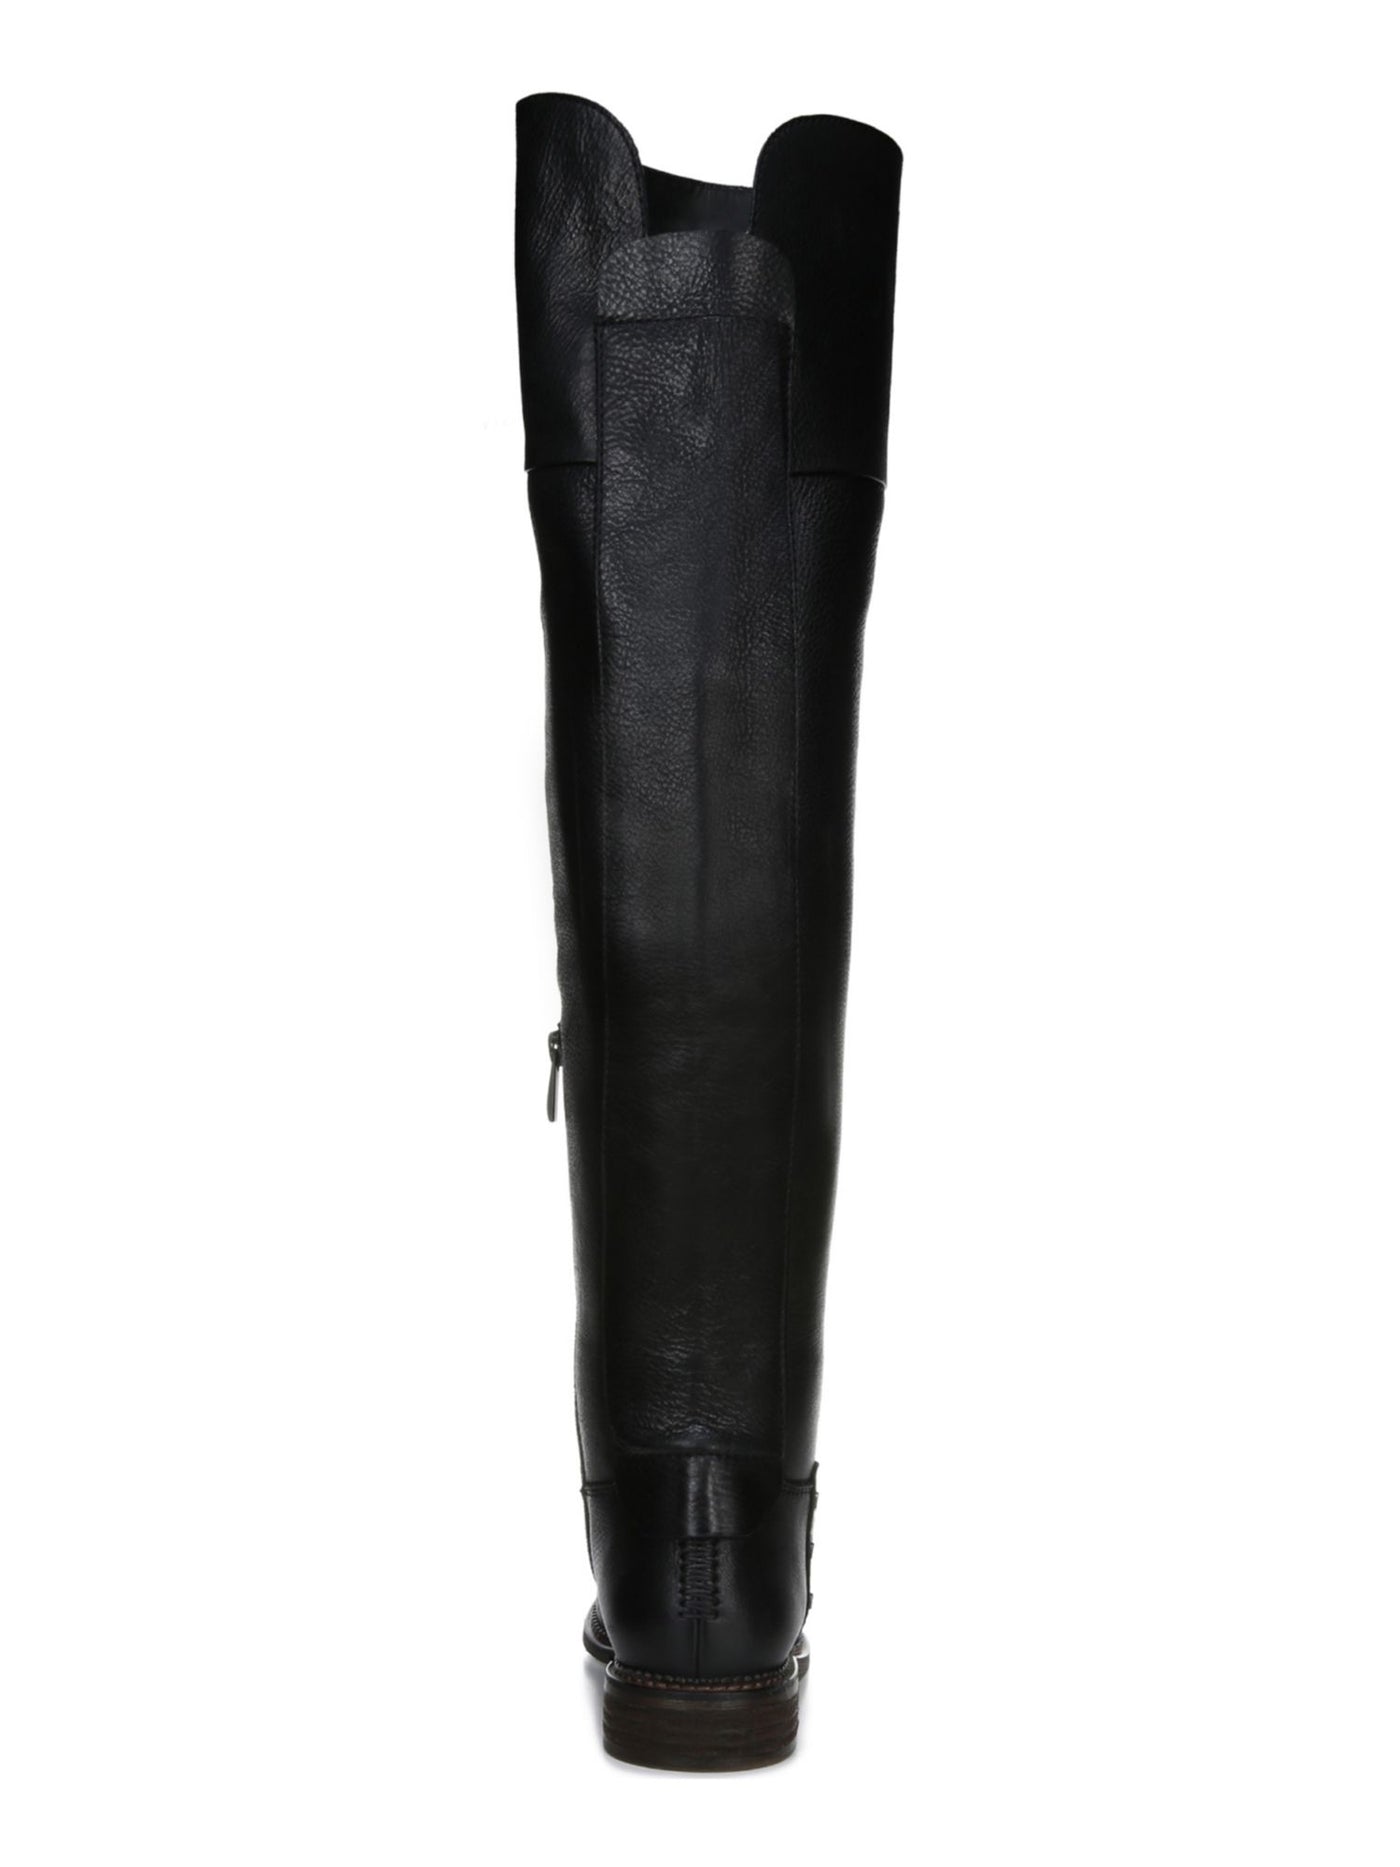 FRANCO SARTO Womens Black Logo Hardware Studded Goring Haleen Round Toe Block Heel Zip-Up Leather Heeled Boots 8.5 M